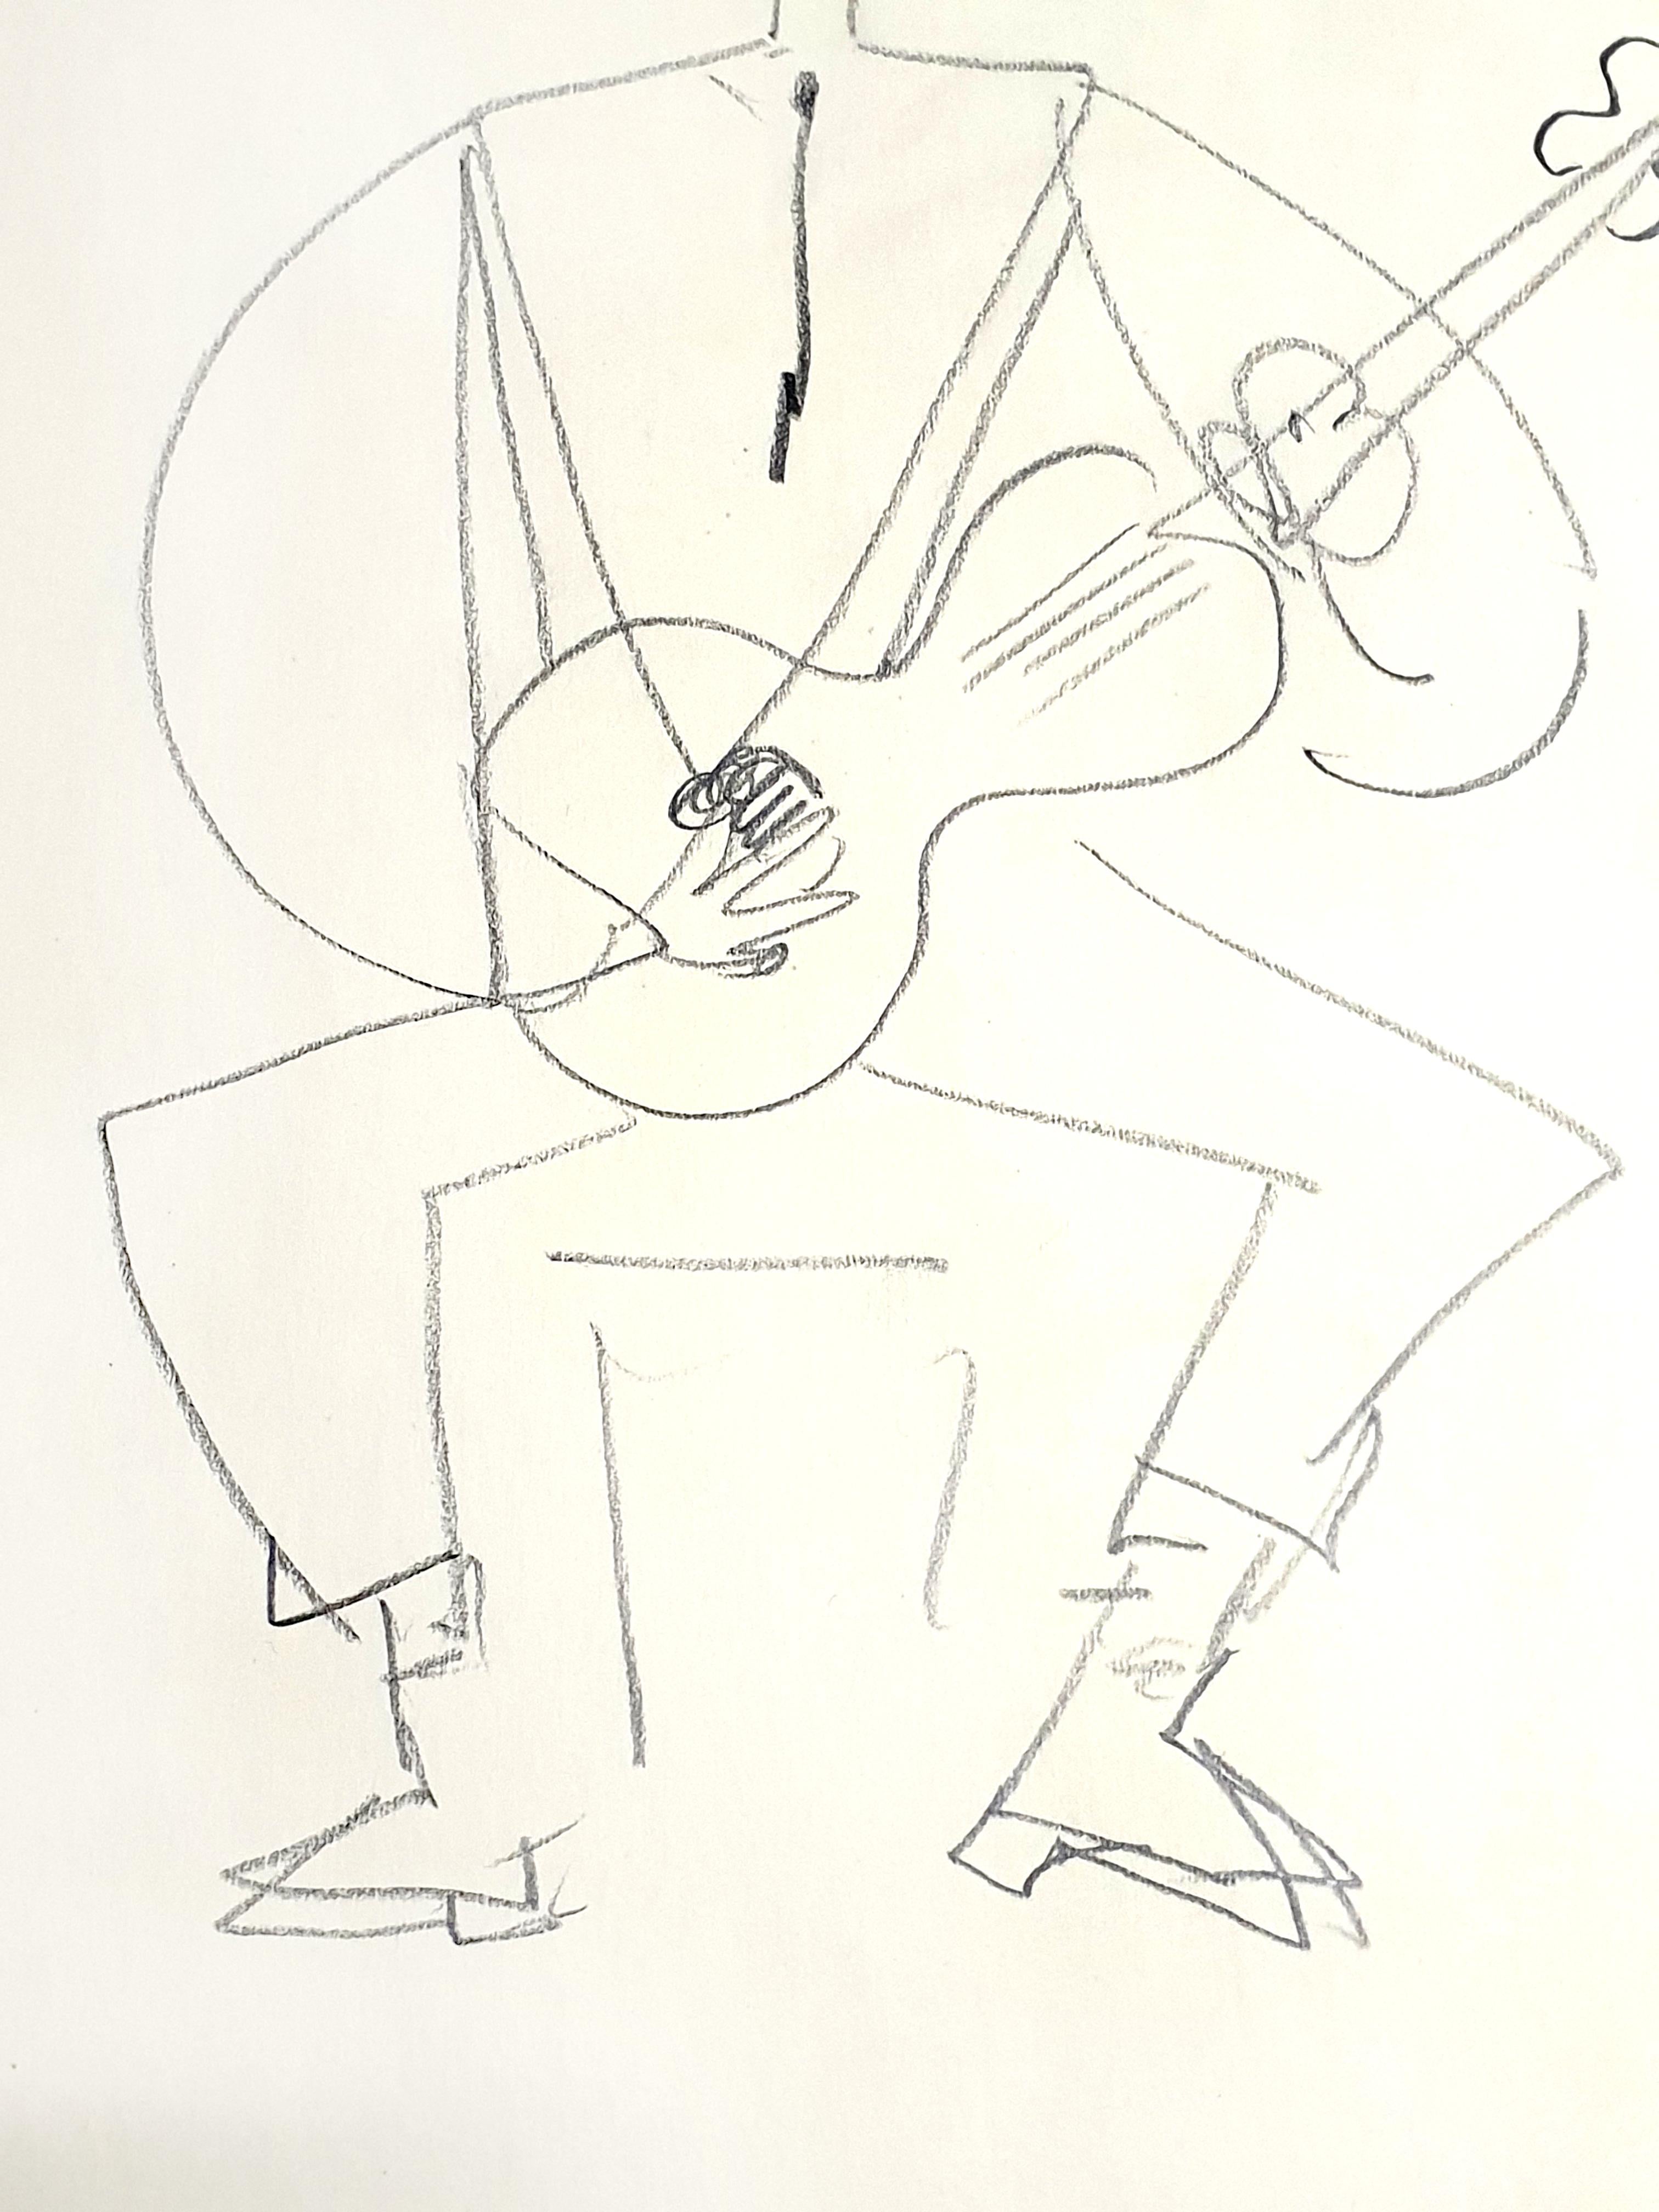 Jean Cocteau - Spanish Guitarist - Original Signed Drawing
Circa 1930
Pencil on paper
47 x 33 cm
Provenance : Succession Dermit